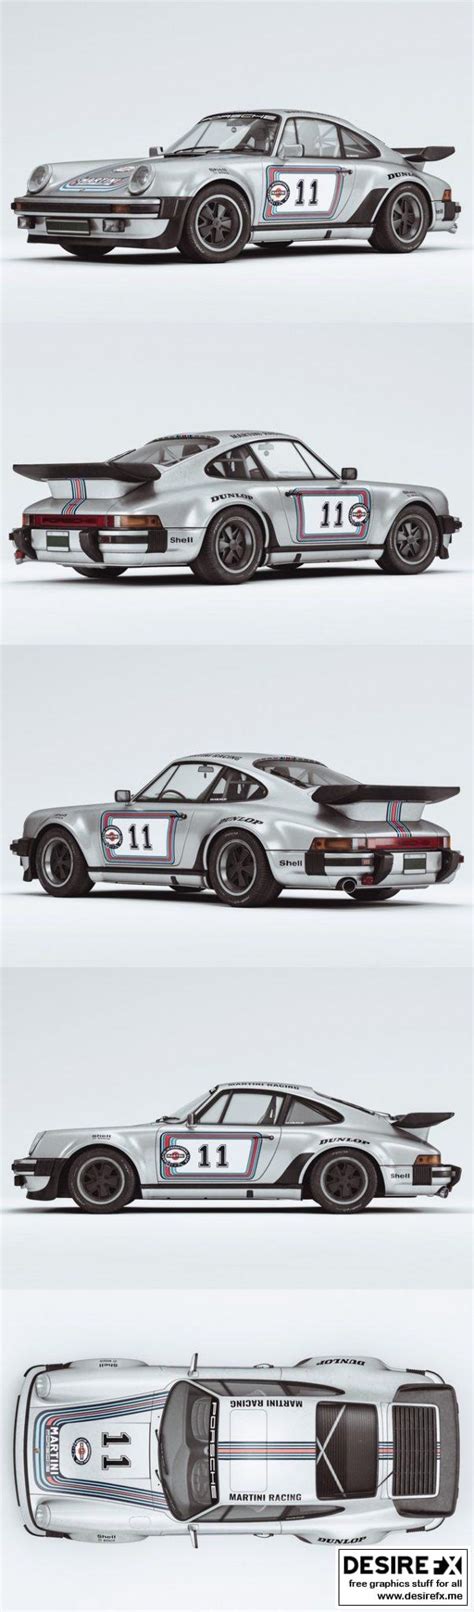 Desire Fx 3d Models Porsche 911 Turbo Game Ready